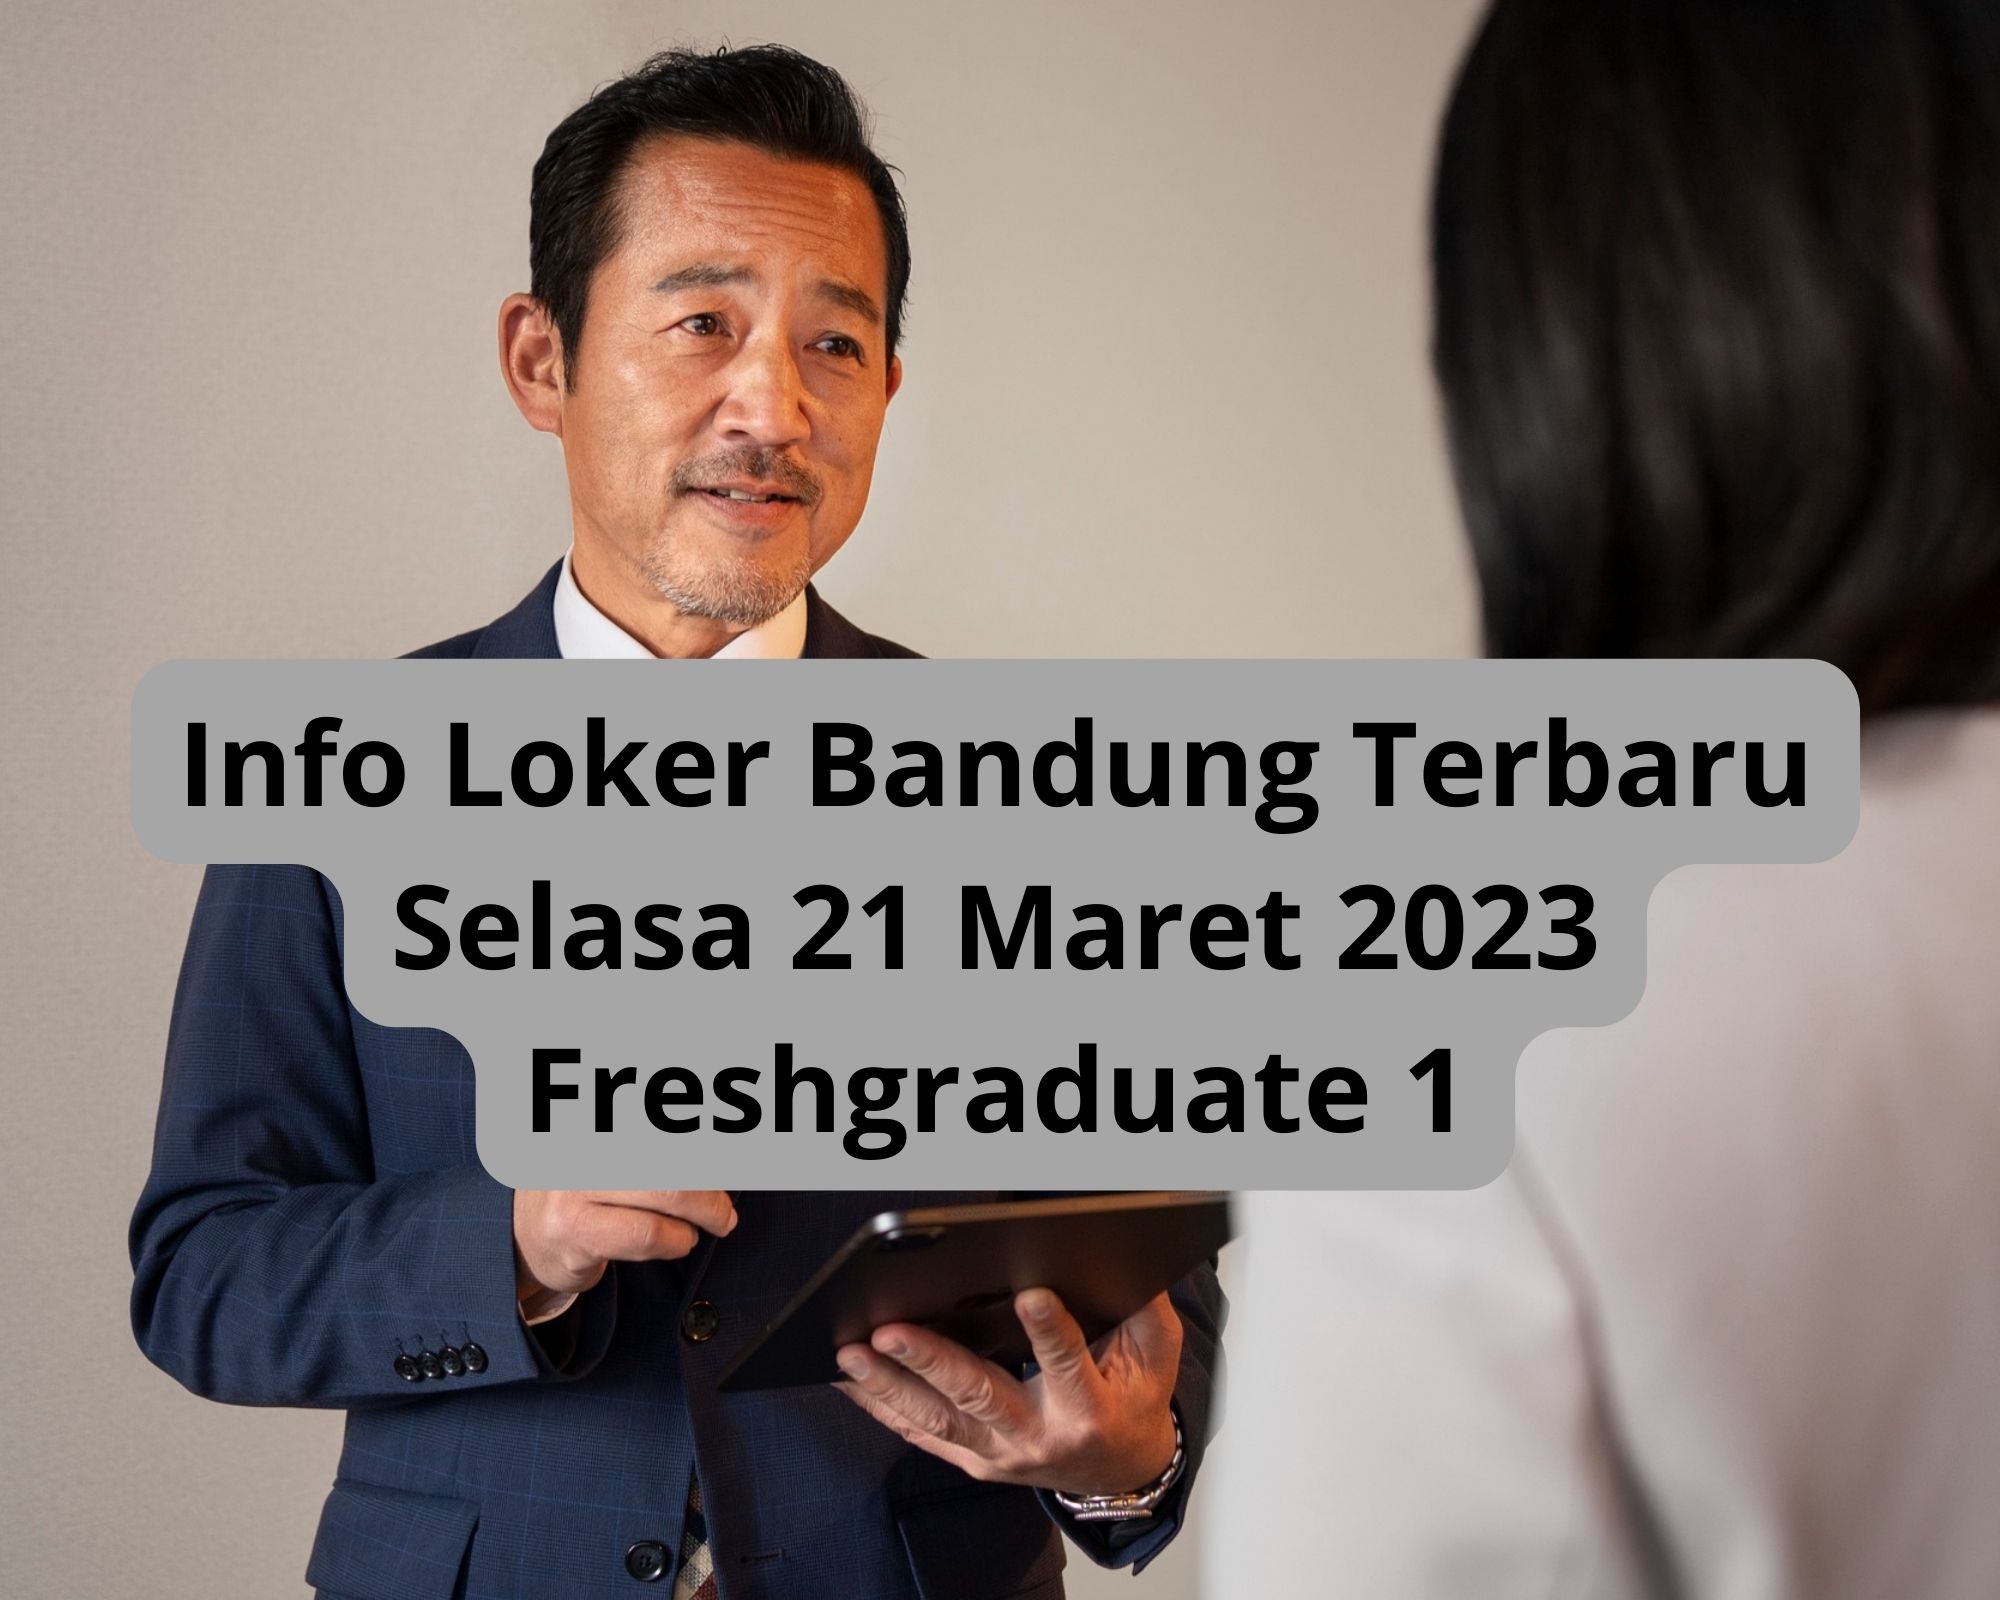 Info Loker Bandung Terbaru Selasa 21 Maret 2023 Freshgraduate 1